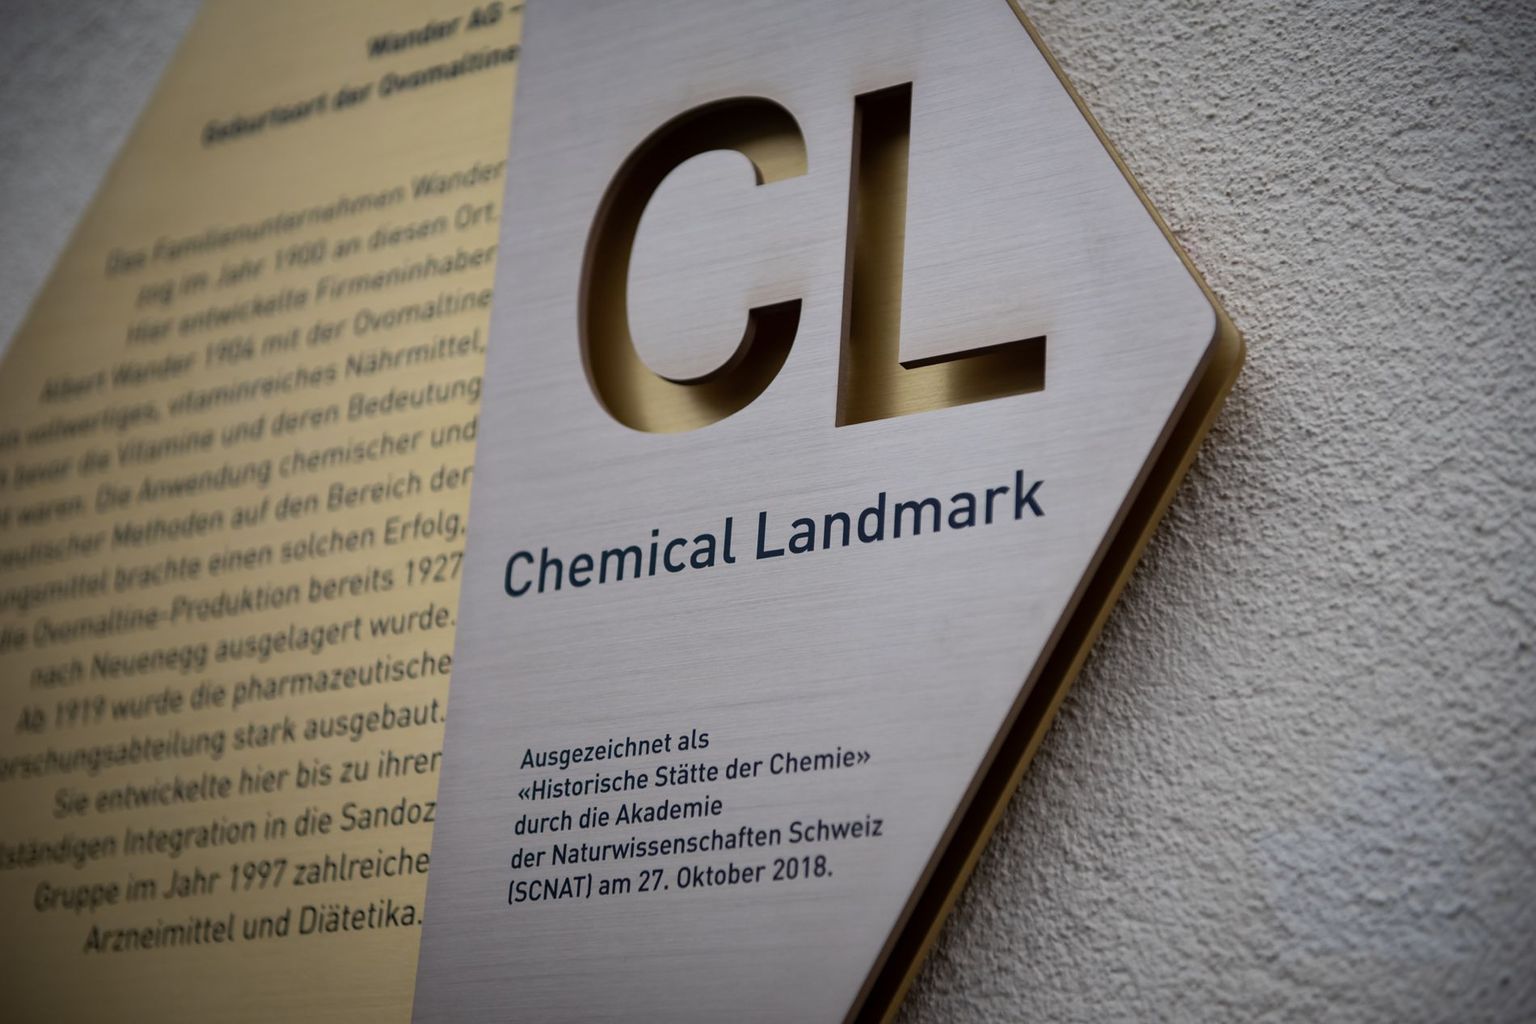 Chemical Landmark 2018